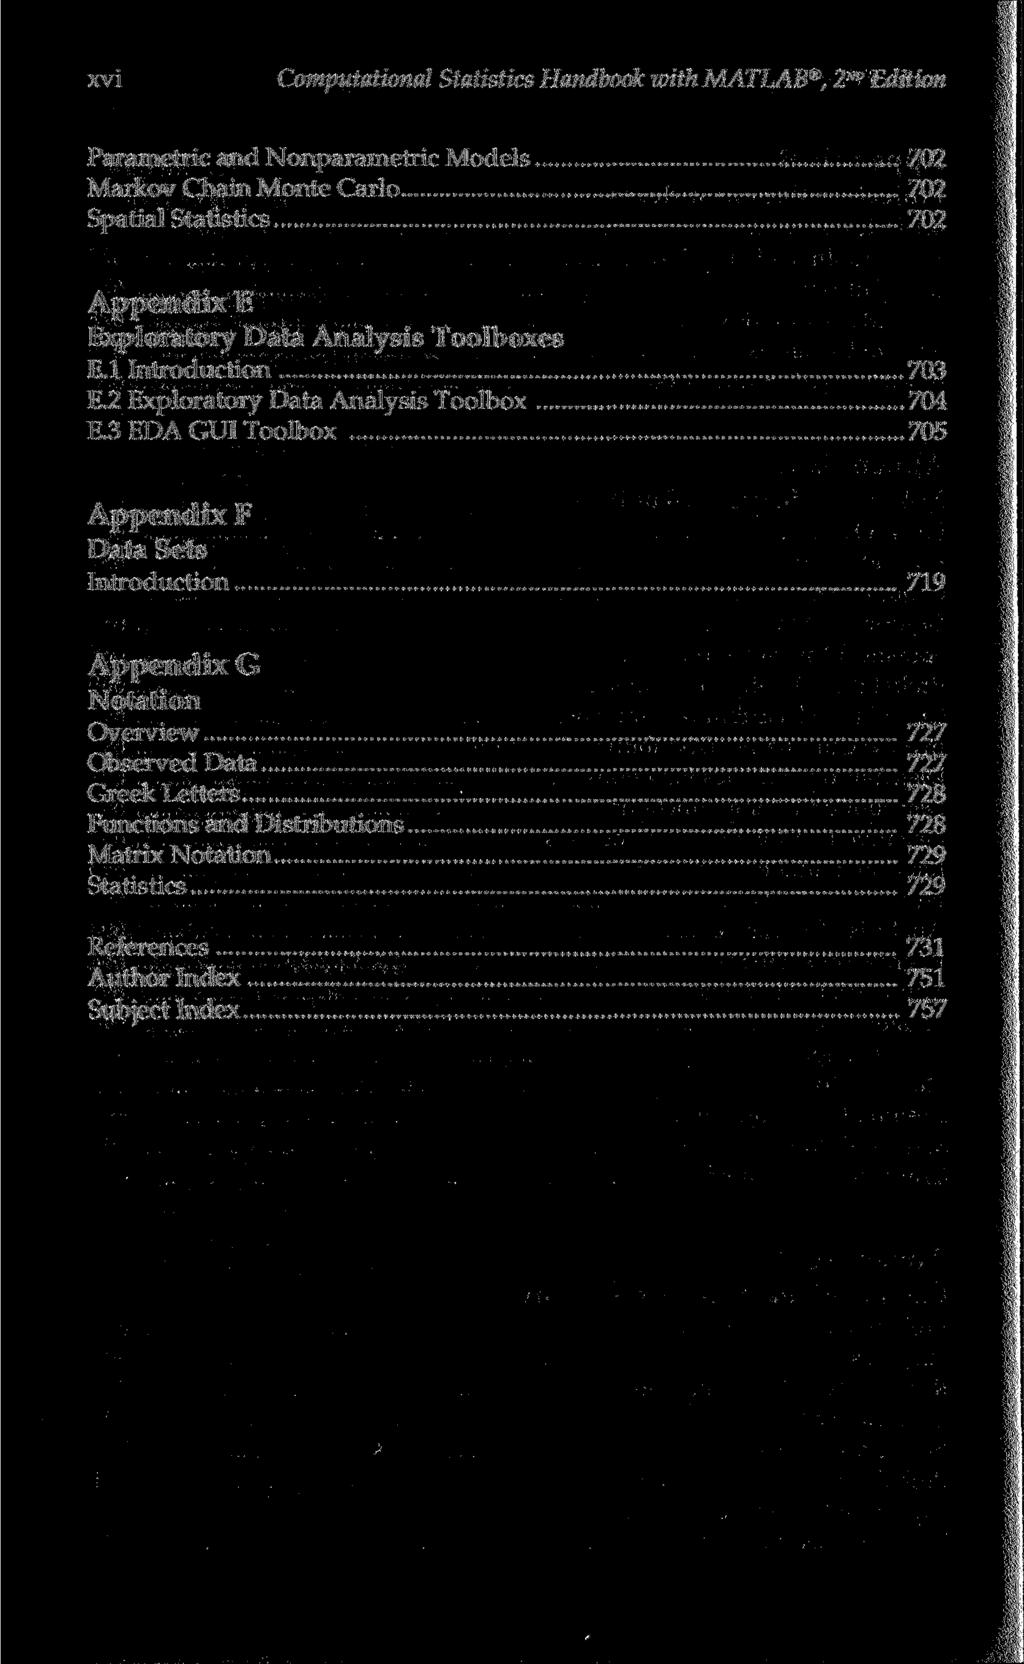 xvi Computational Statistics Handbook with MATLAB, 2 ND Edition Parametric and Nonparametric Models 702 Markov Chain Monte Carlo 702 Spatial Statistics 702 Appendix E Exploratory Data Analysis